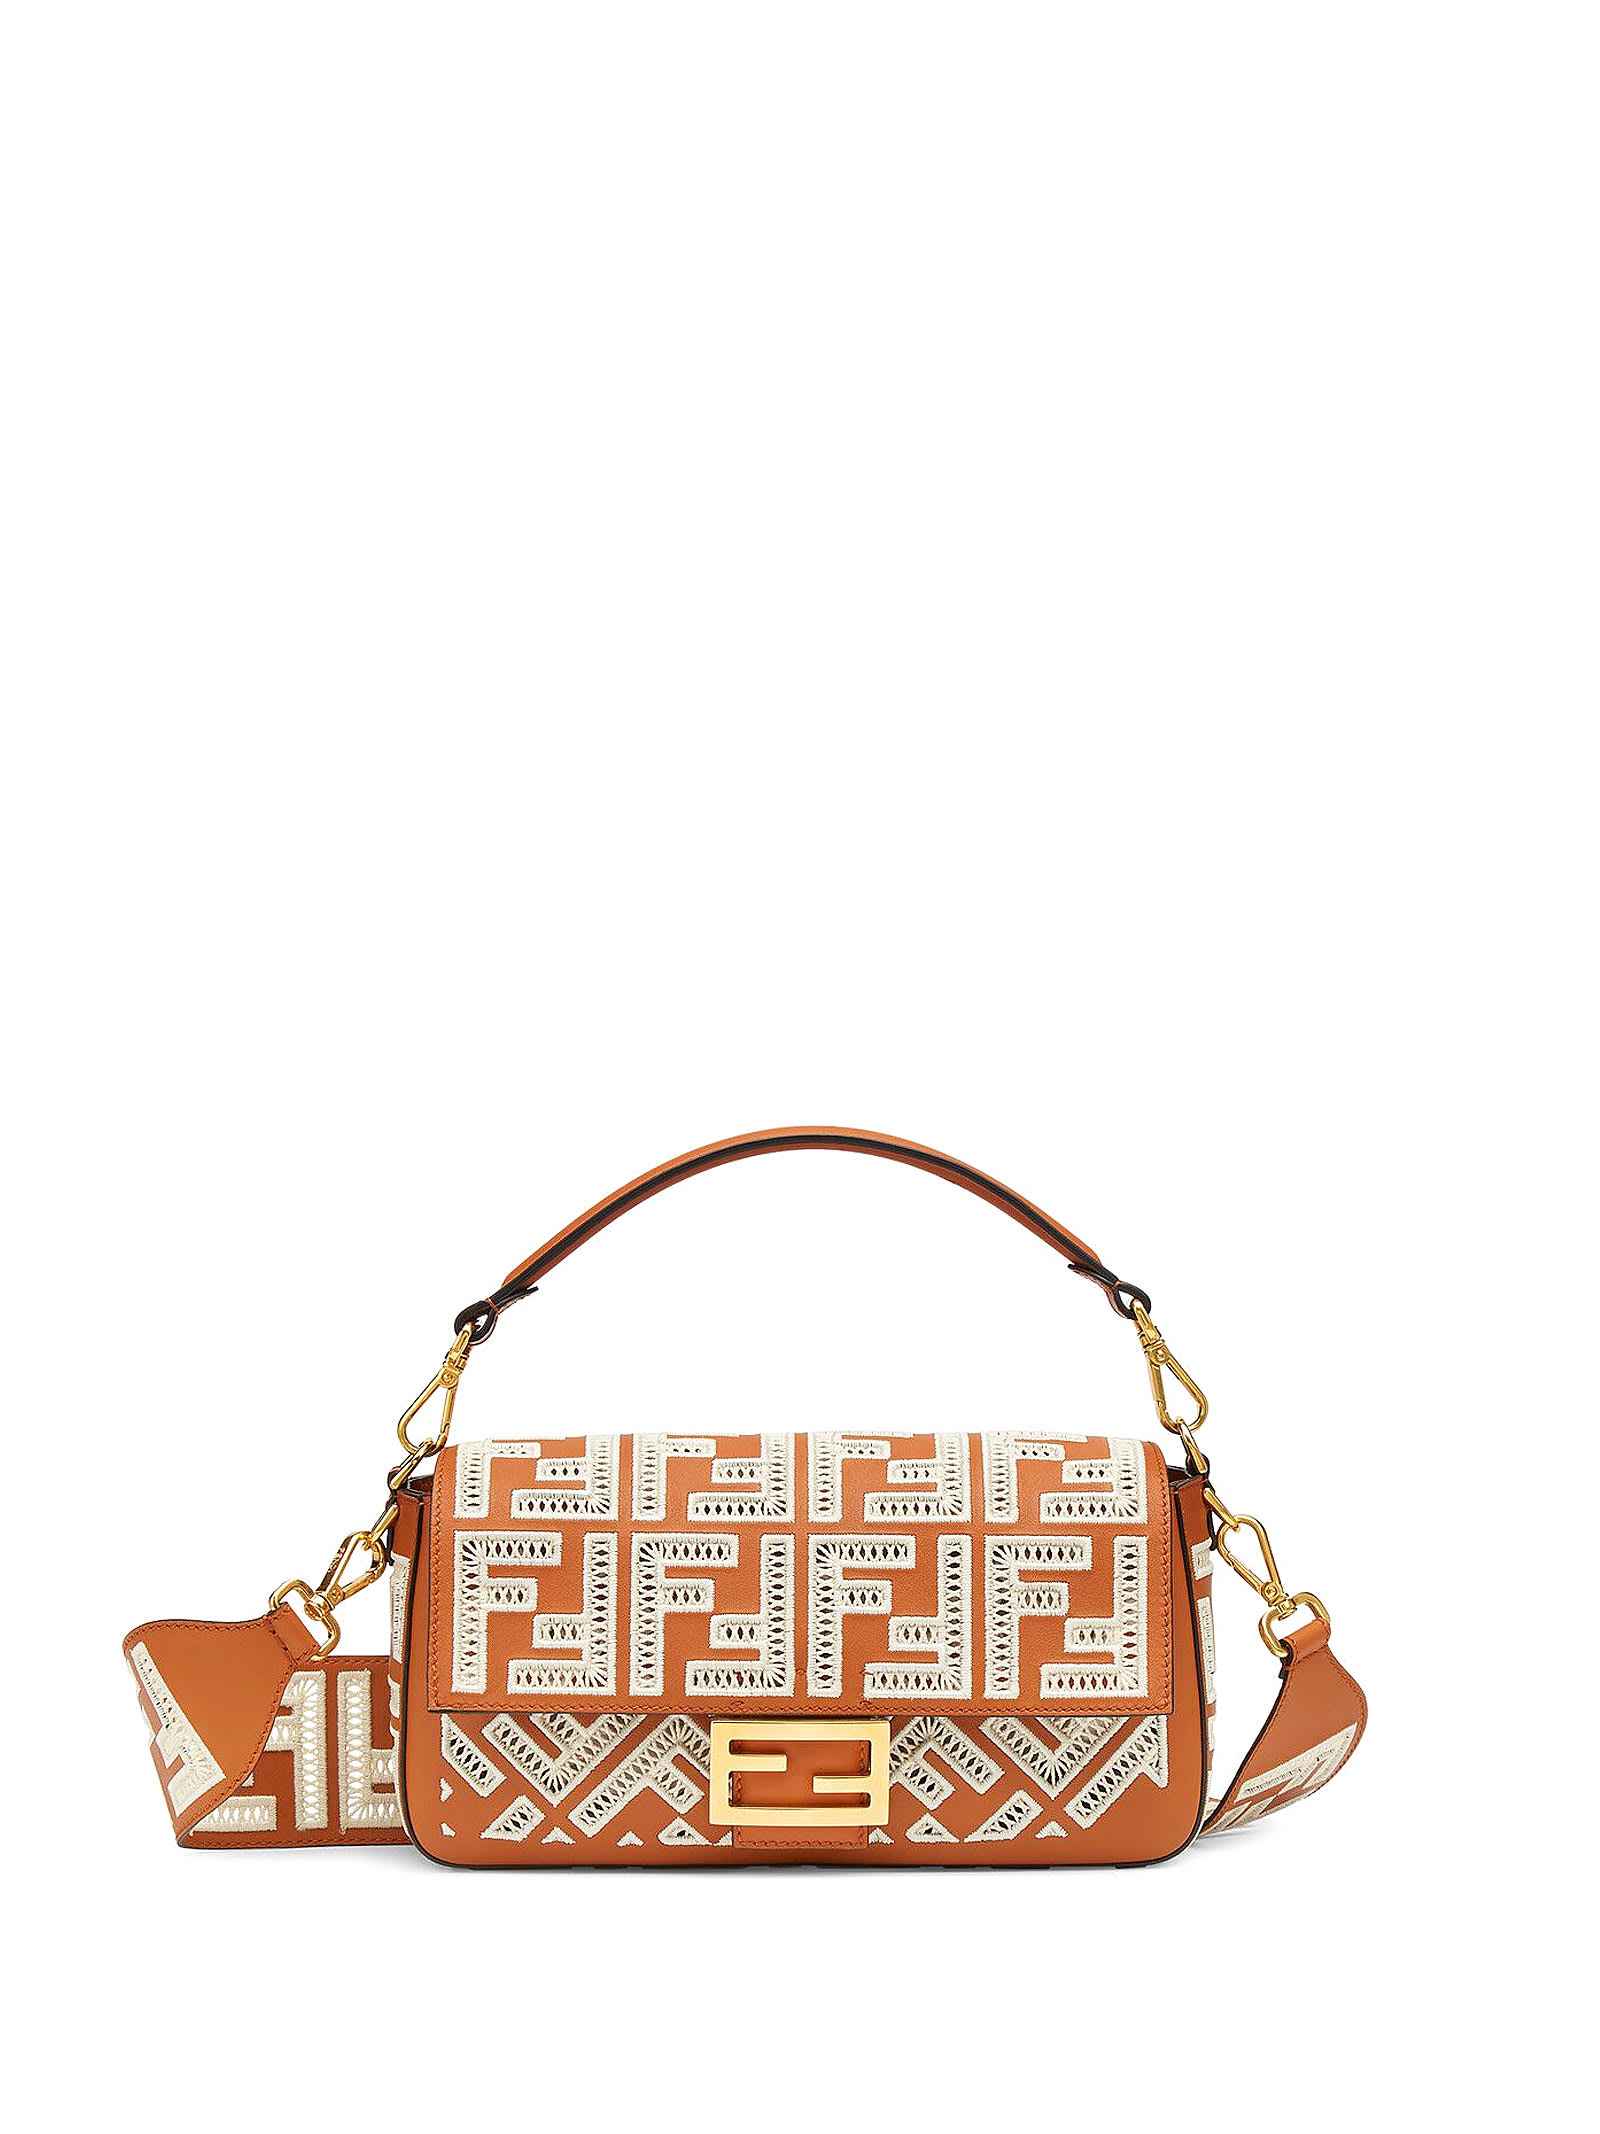 Fendi Baguette Ff Embroidery Bag In Brandy